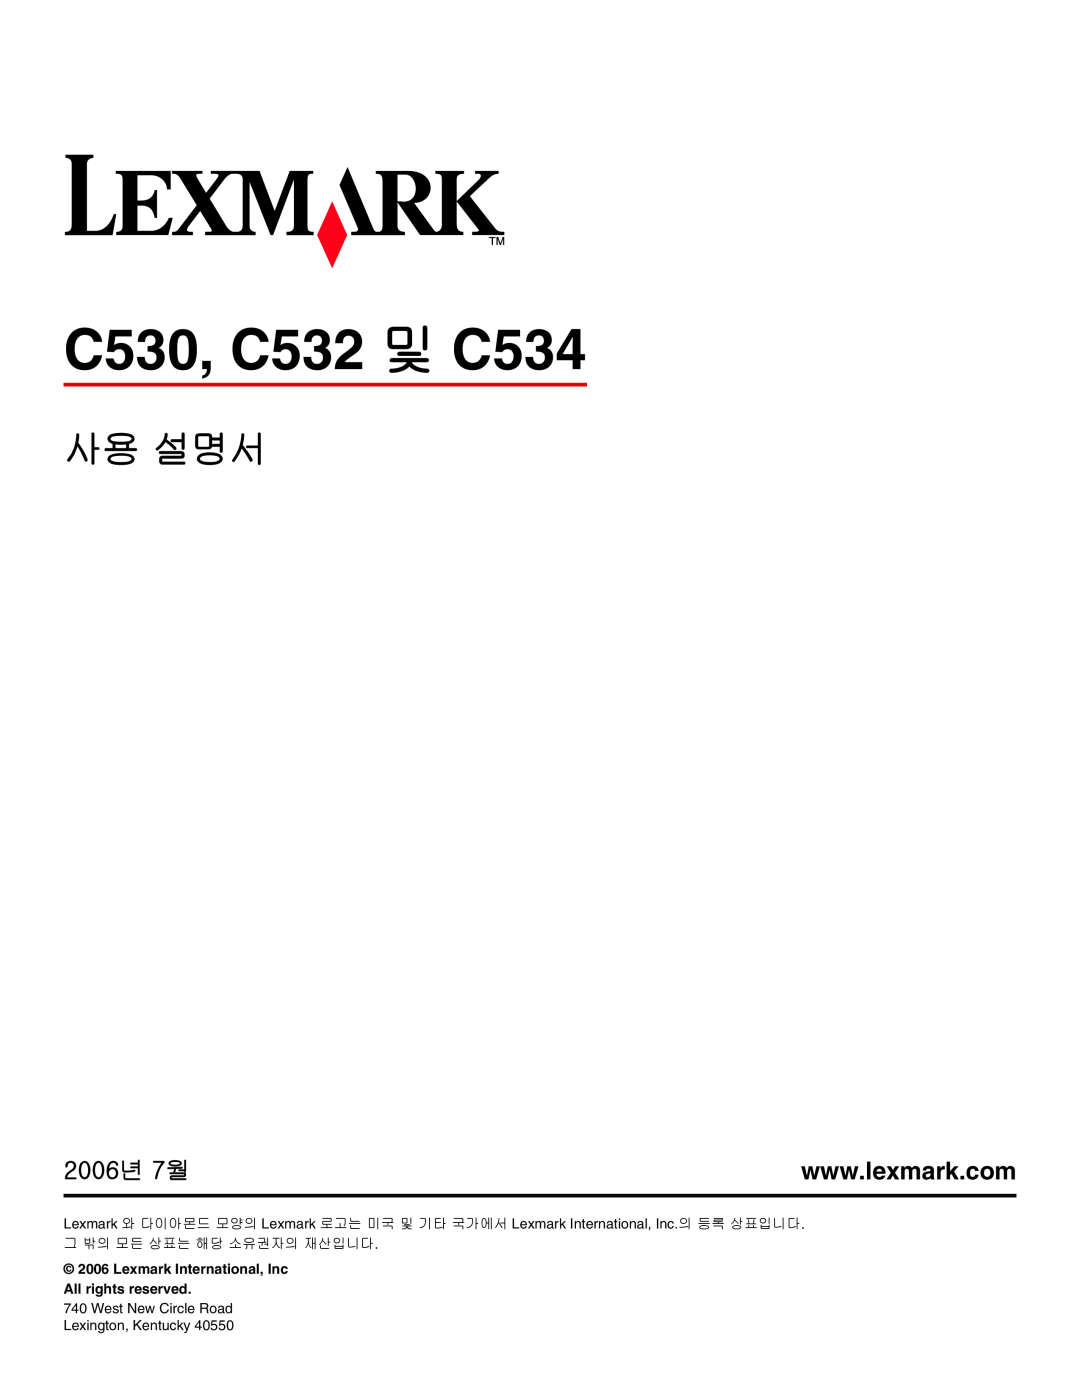 Lexmark manual 사용 설명서, C530, C532 및 C534, Lexmark International, Inc All rights reserved 